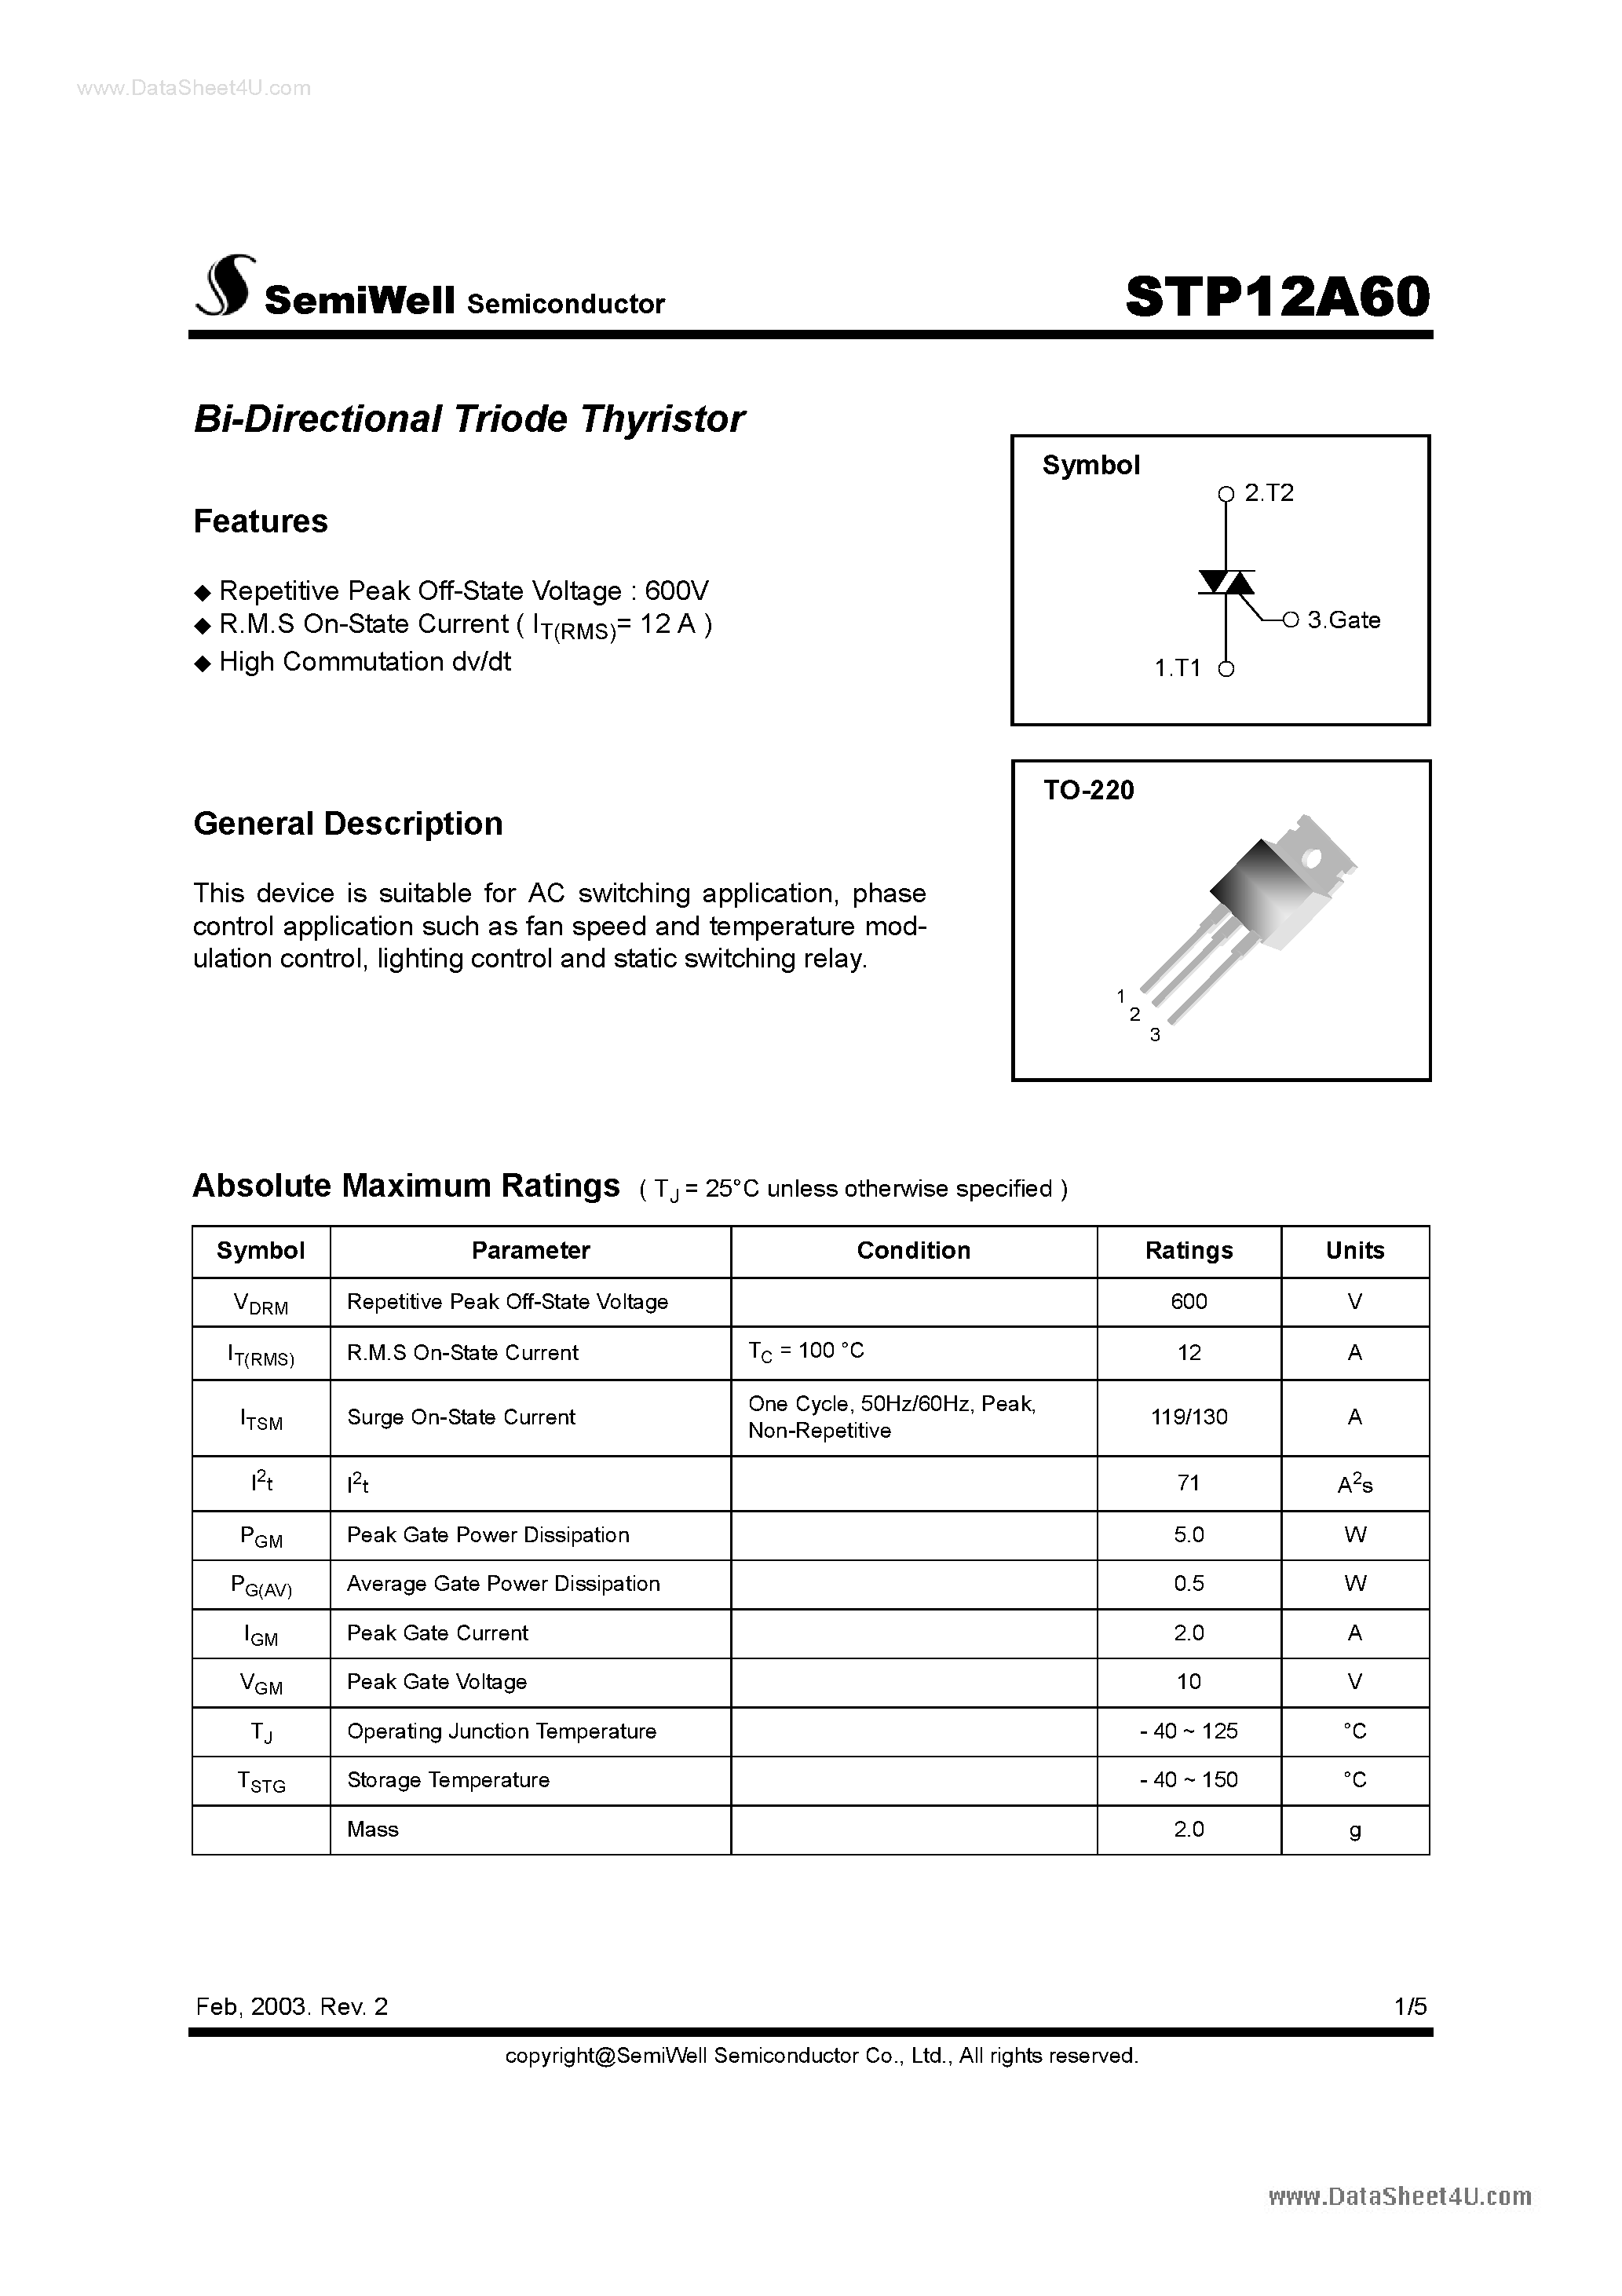 Даташит STP12A60 - Bi-Directional Triode Thyristor страница 1